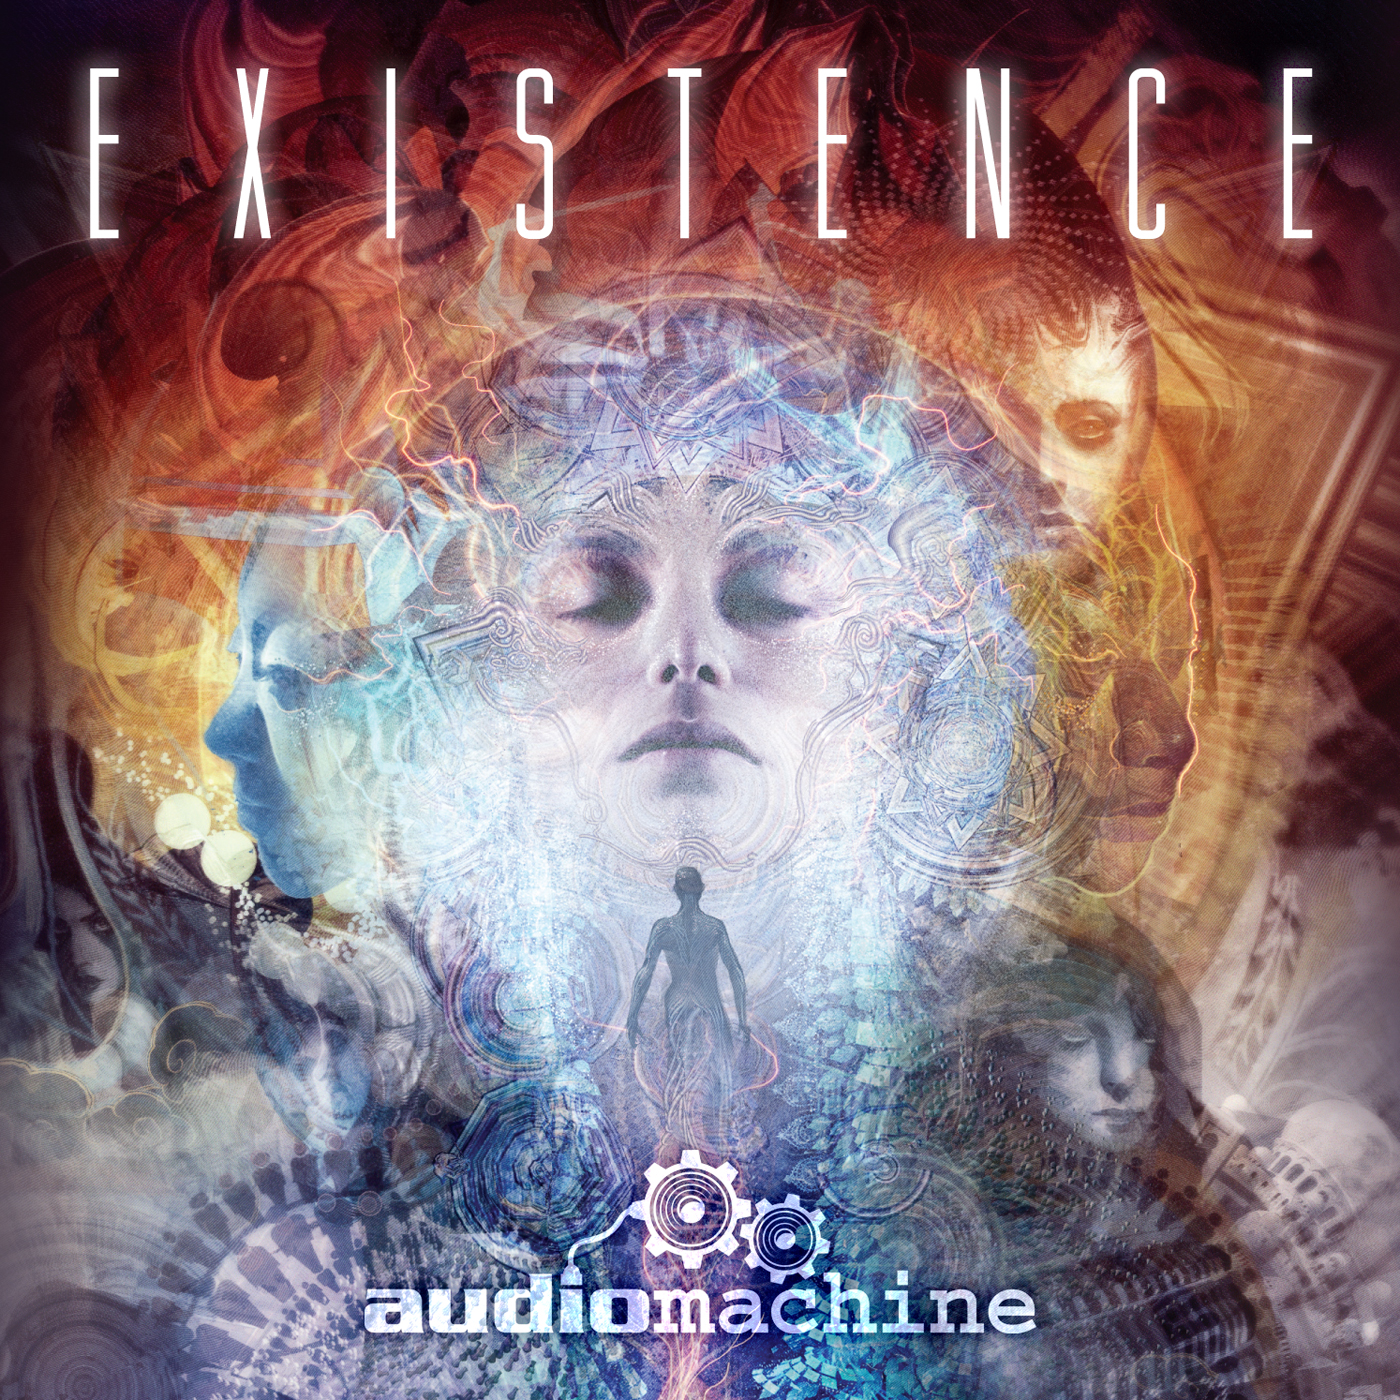 audiomachine: Existence